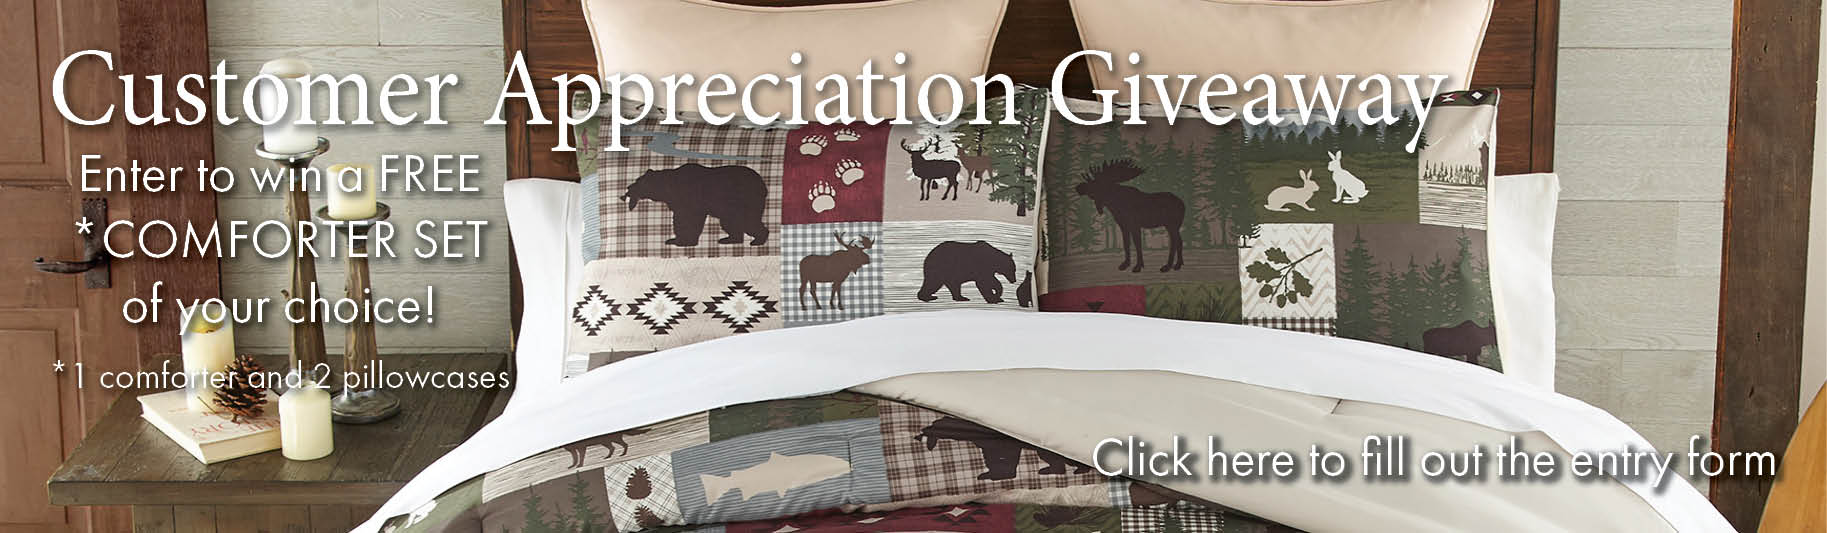 Customer Appreciation Contest Enter to Win a New Comforter Set